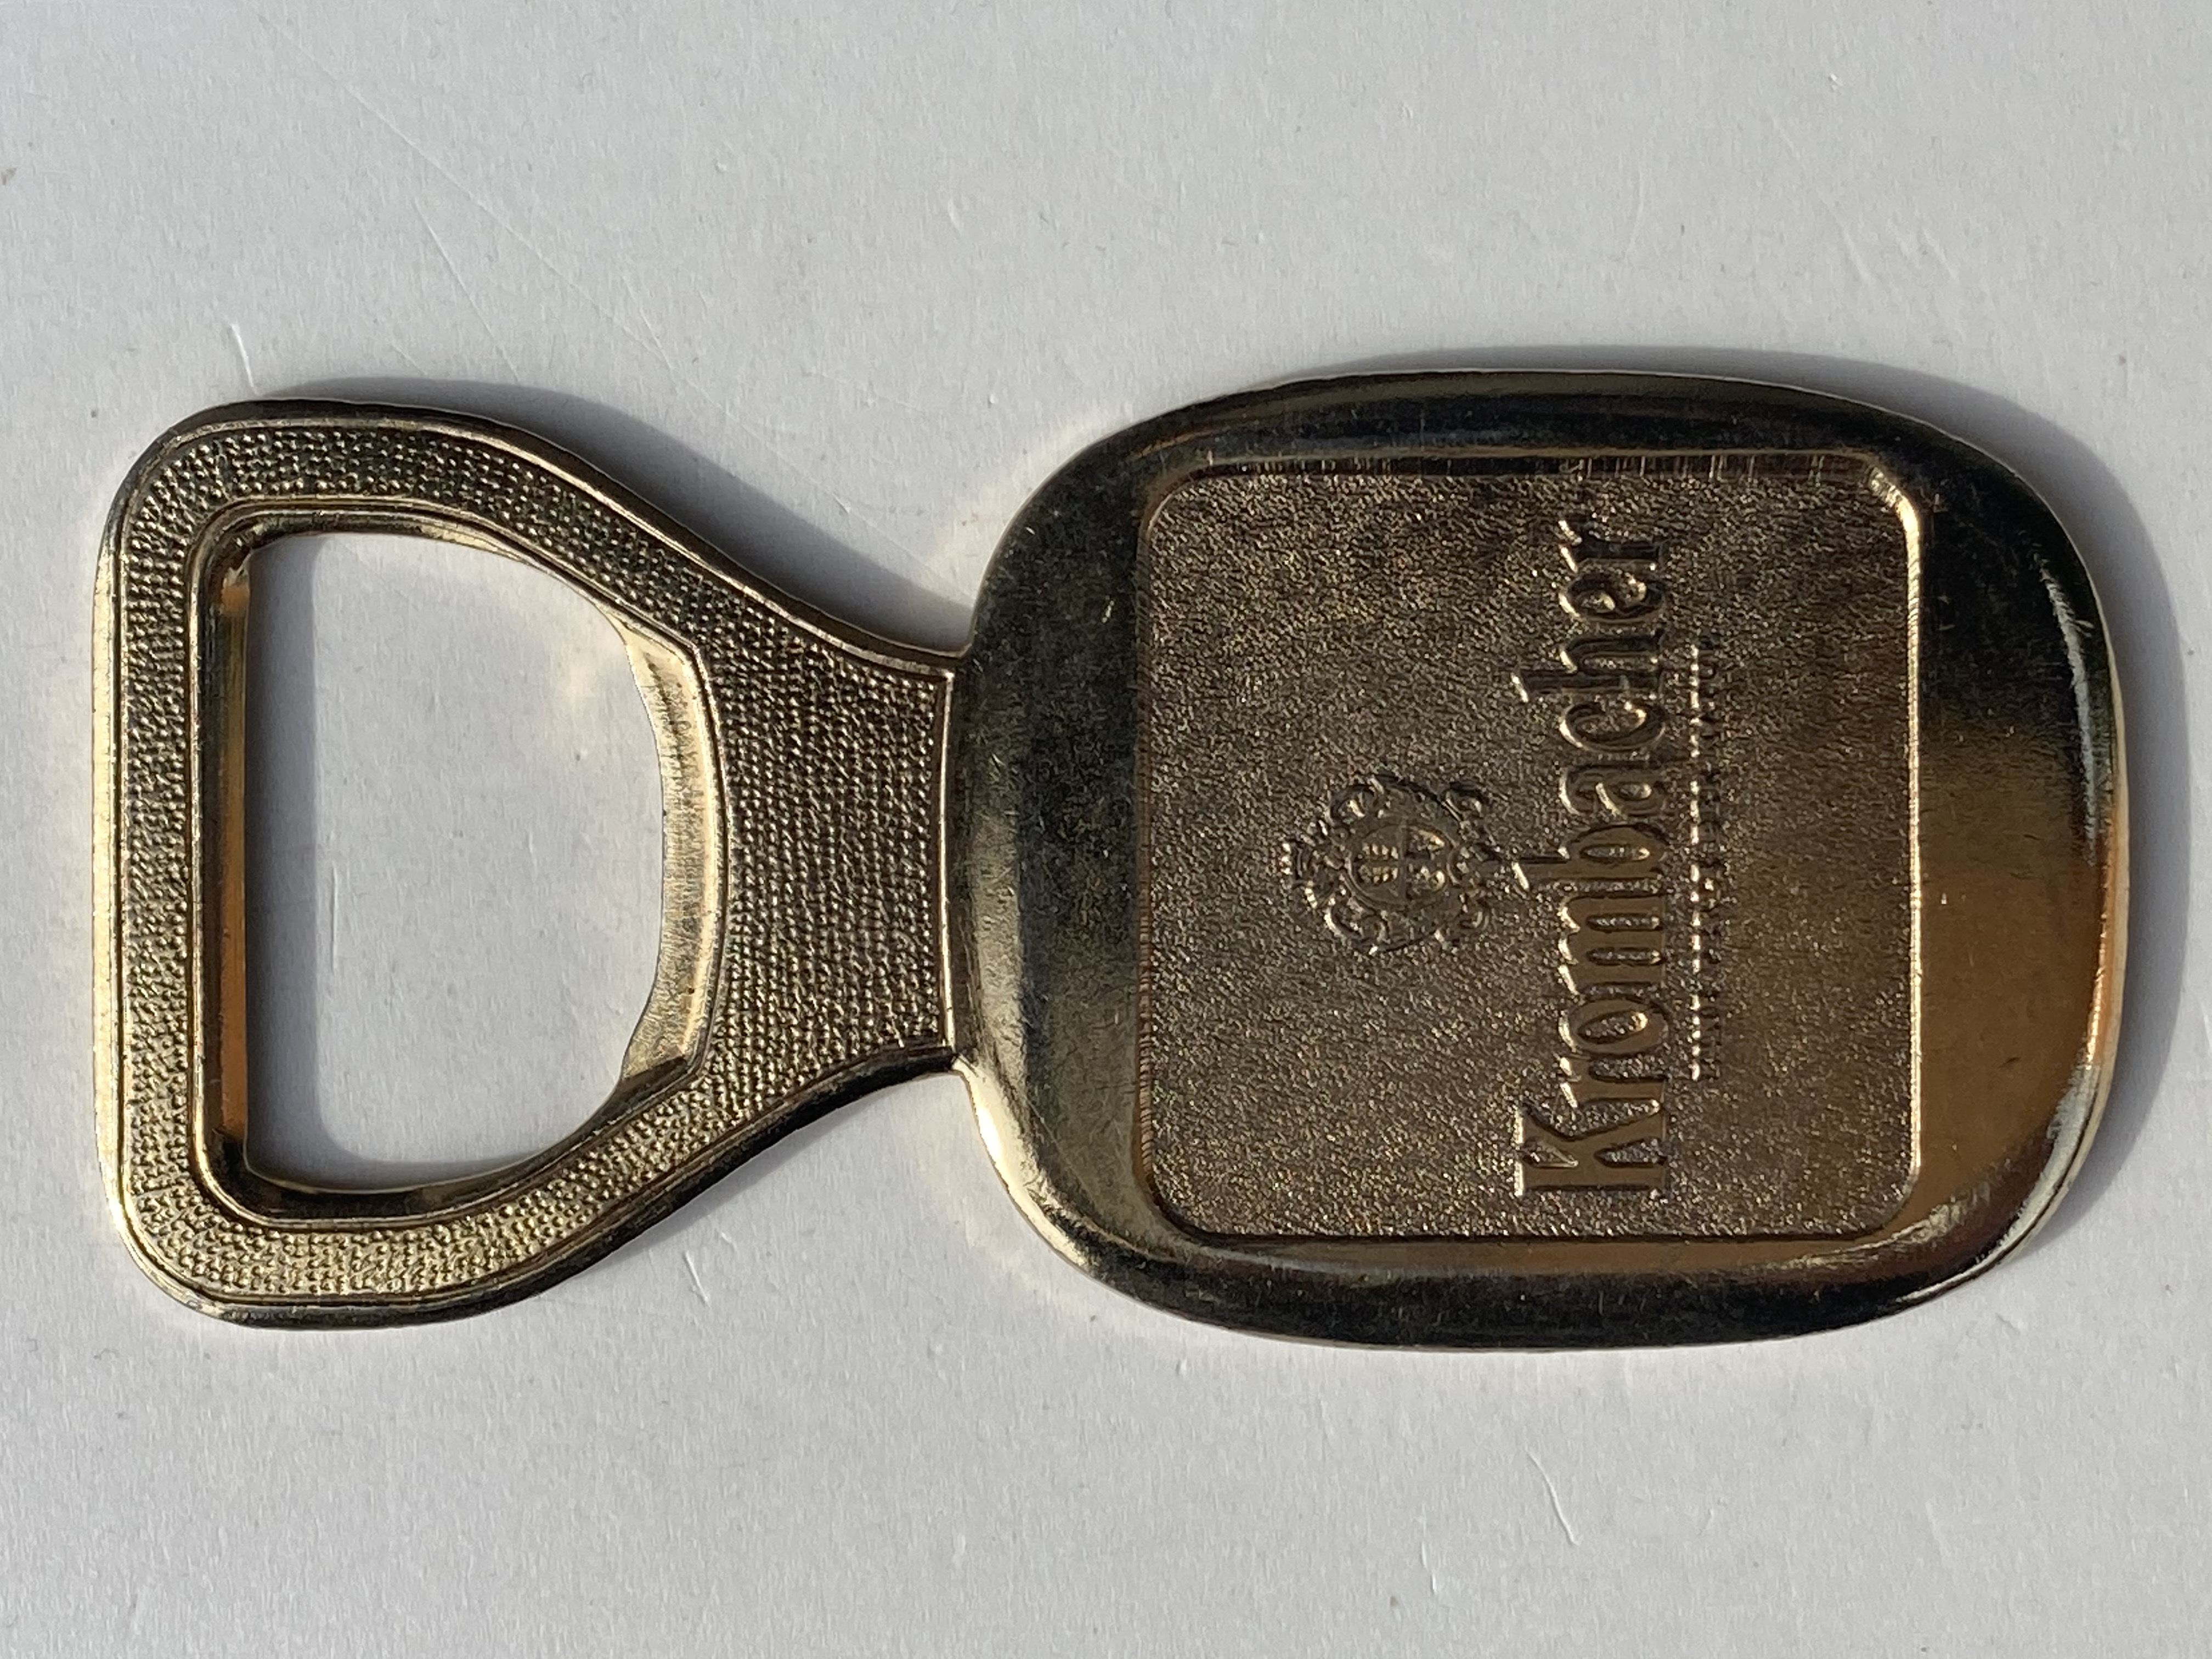 Krombacher golden metal bottle opener with rectangle-shaped body